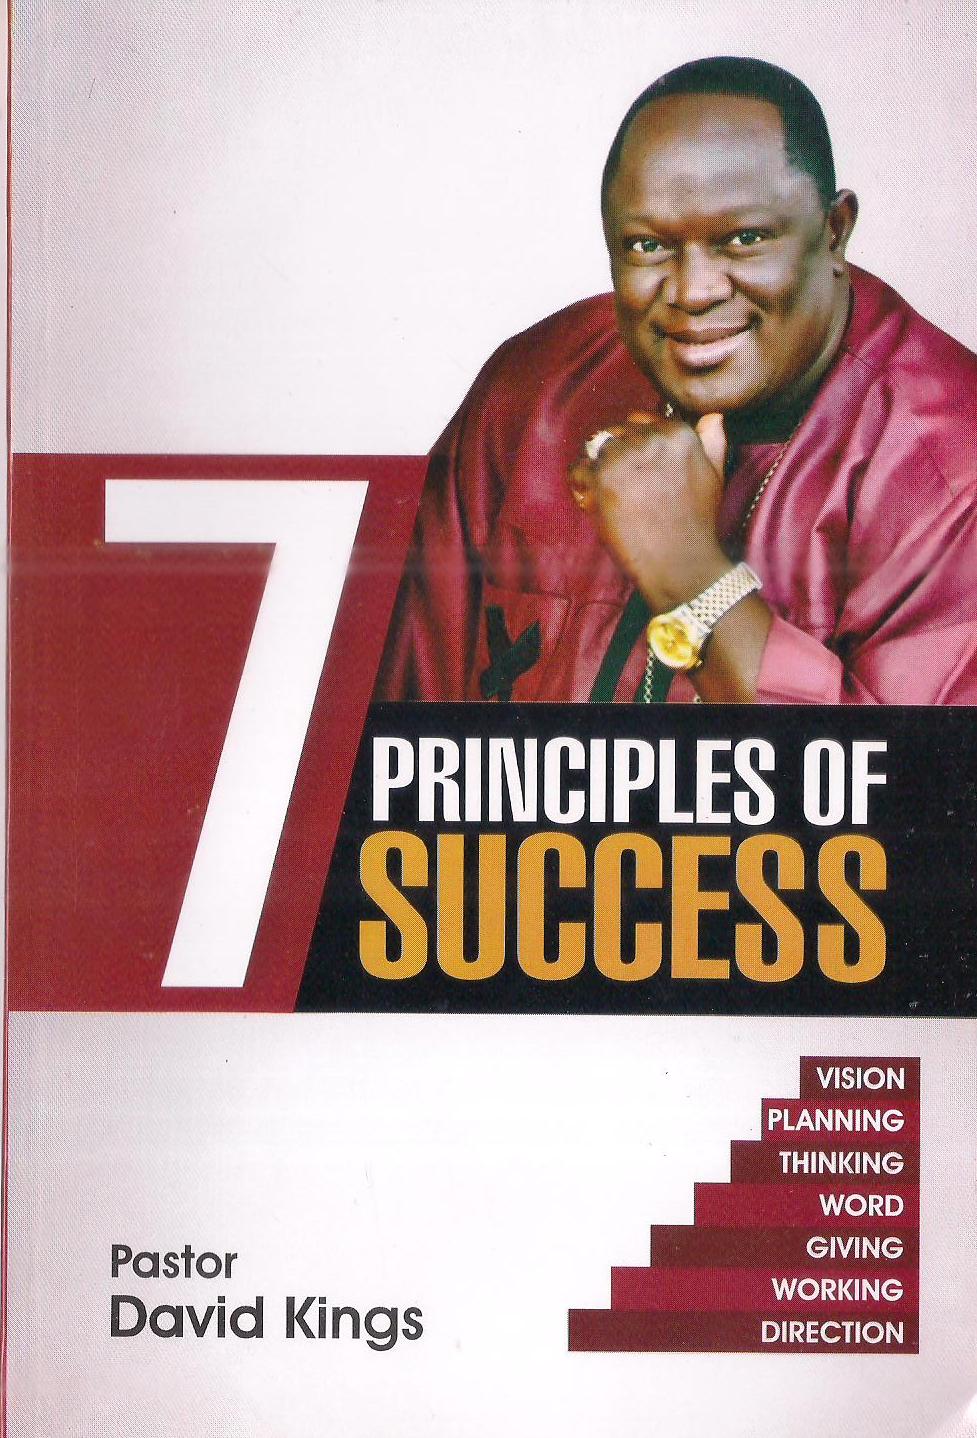 7 Principles of Success